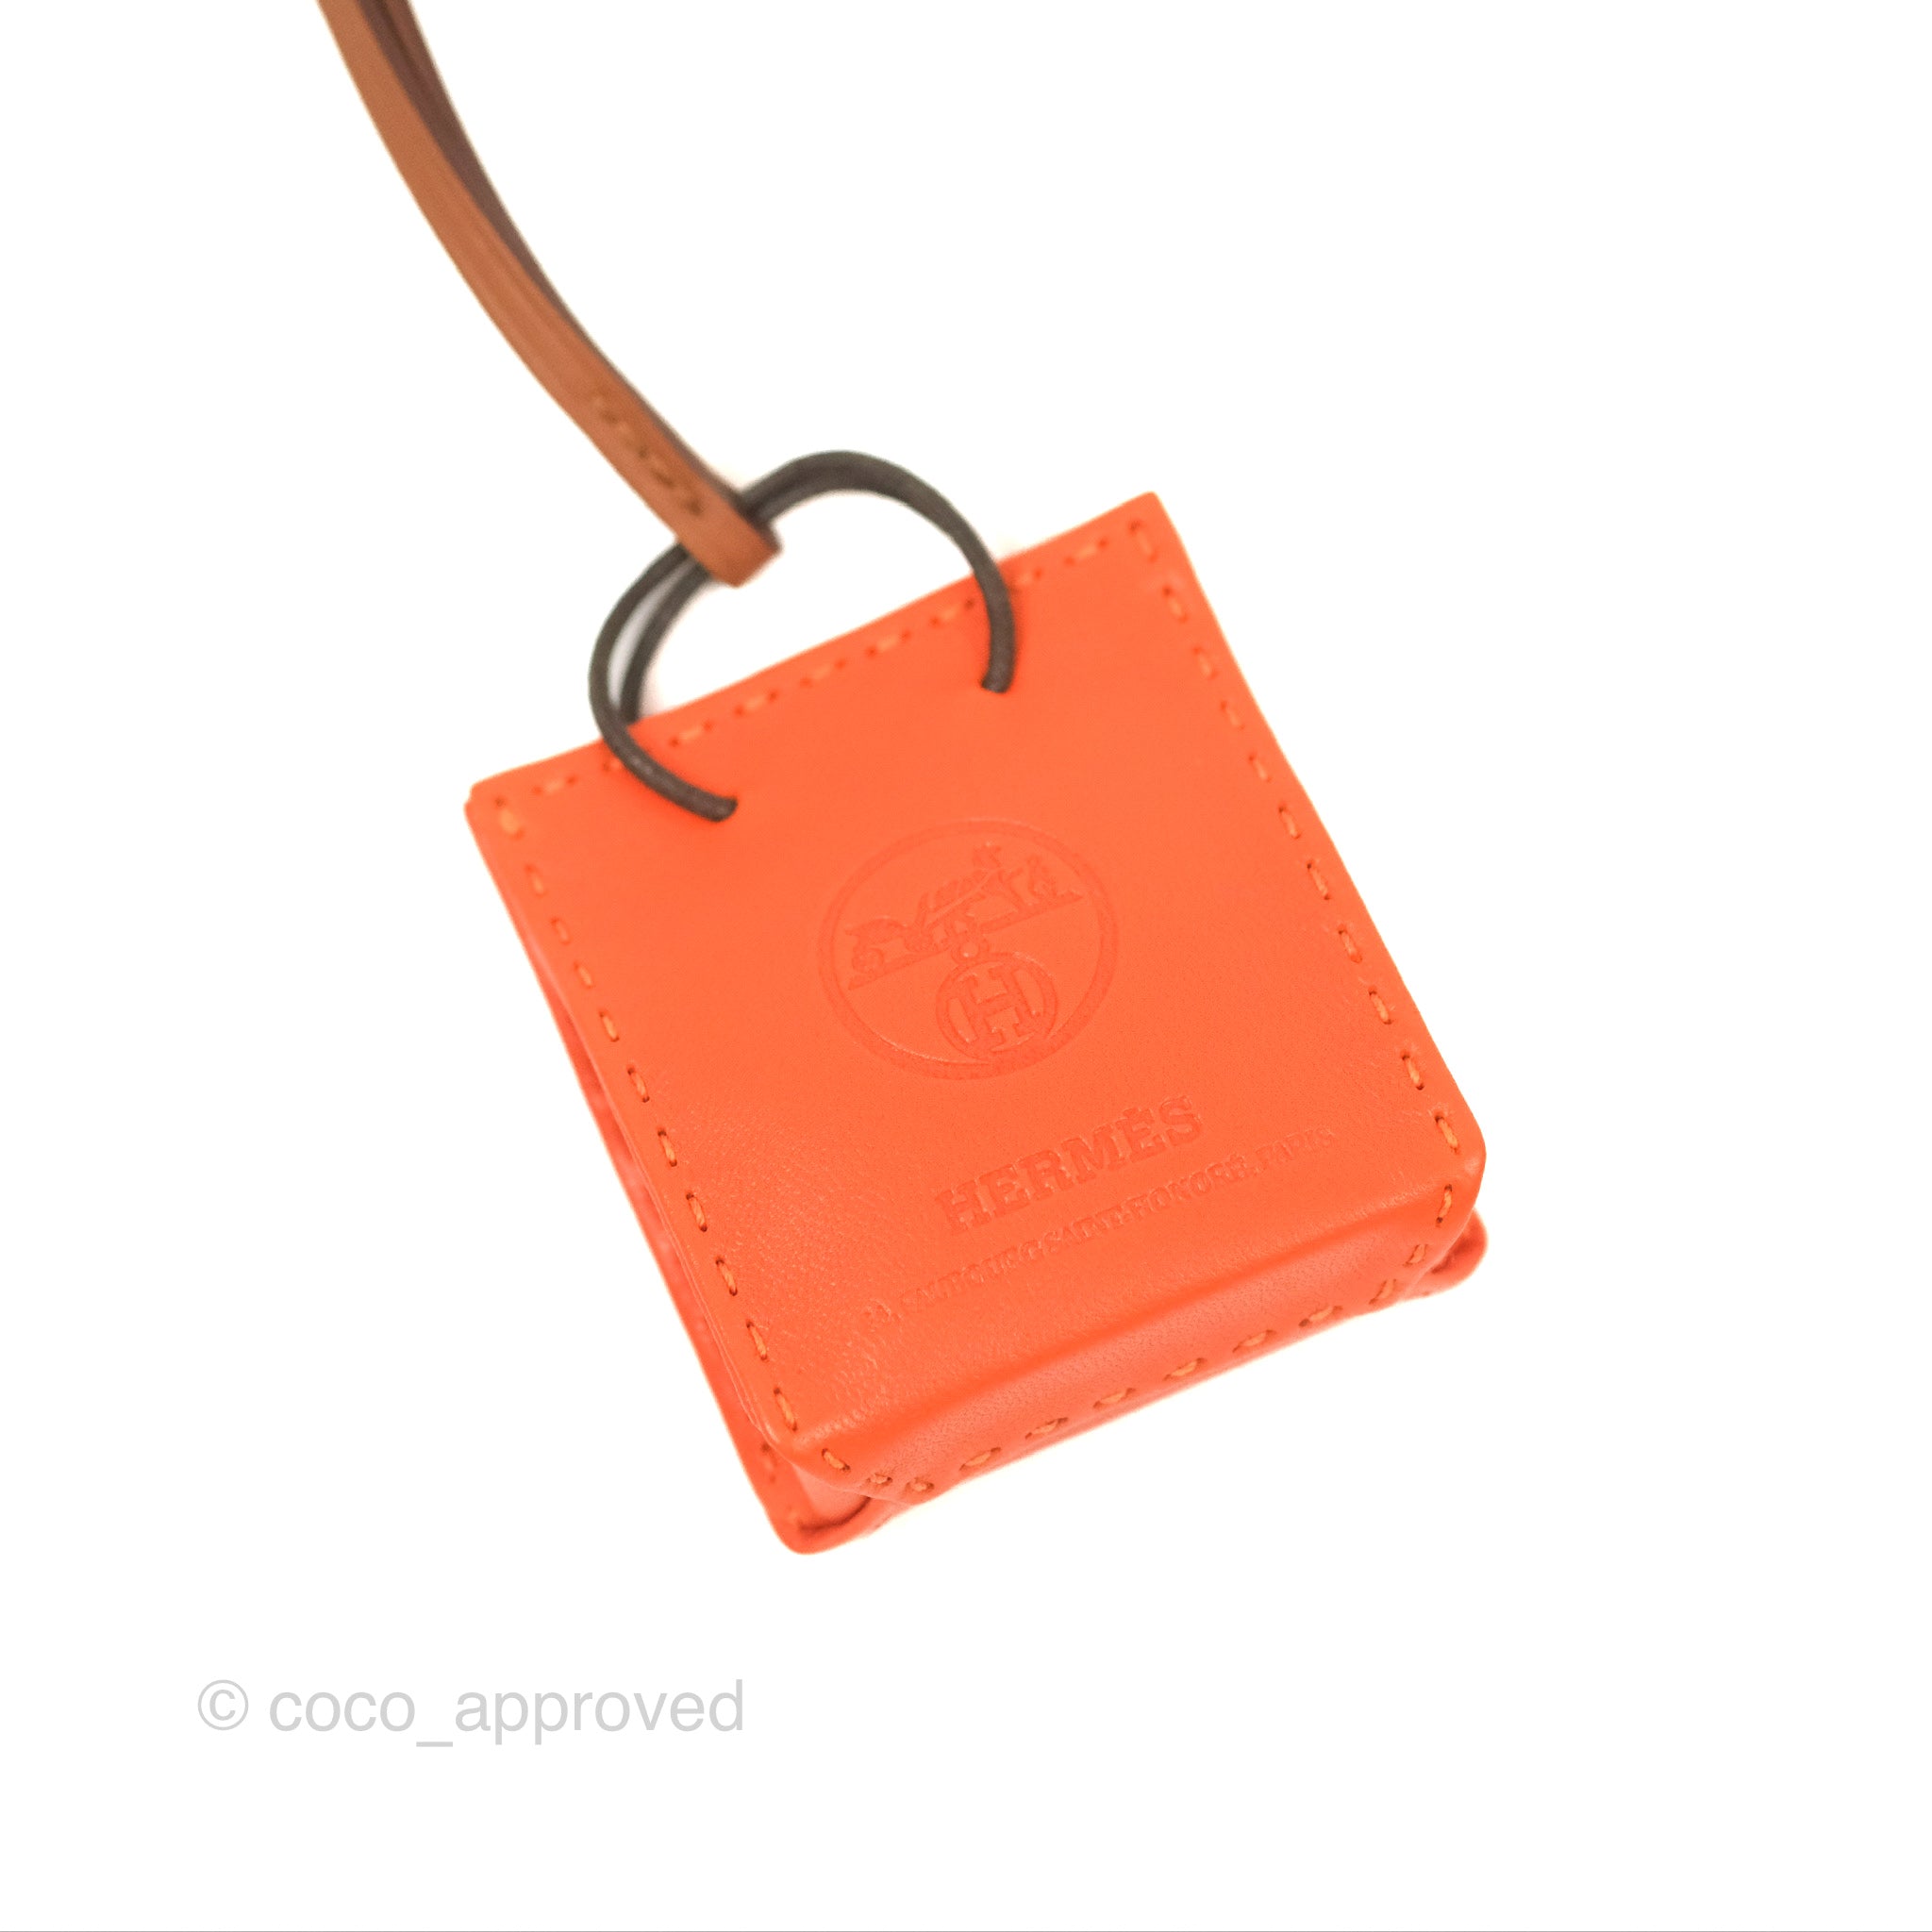 Hermes Orange Mini Shopping Bag Charm Orange Madison Avenue Couture